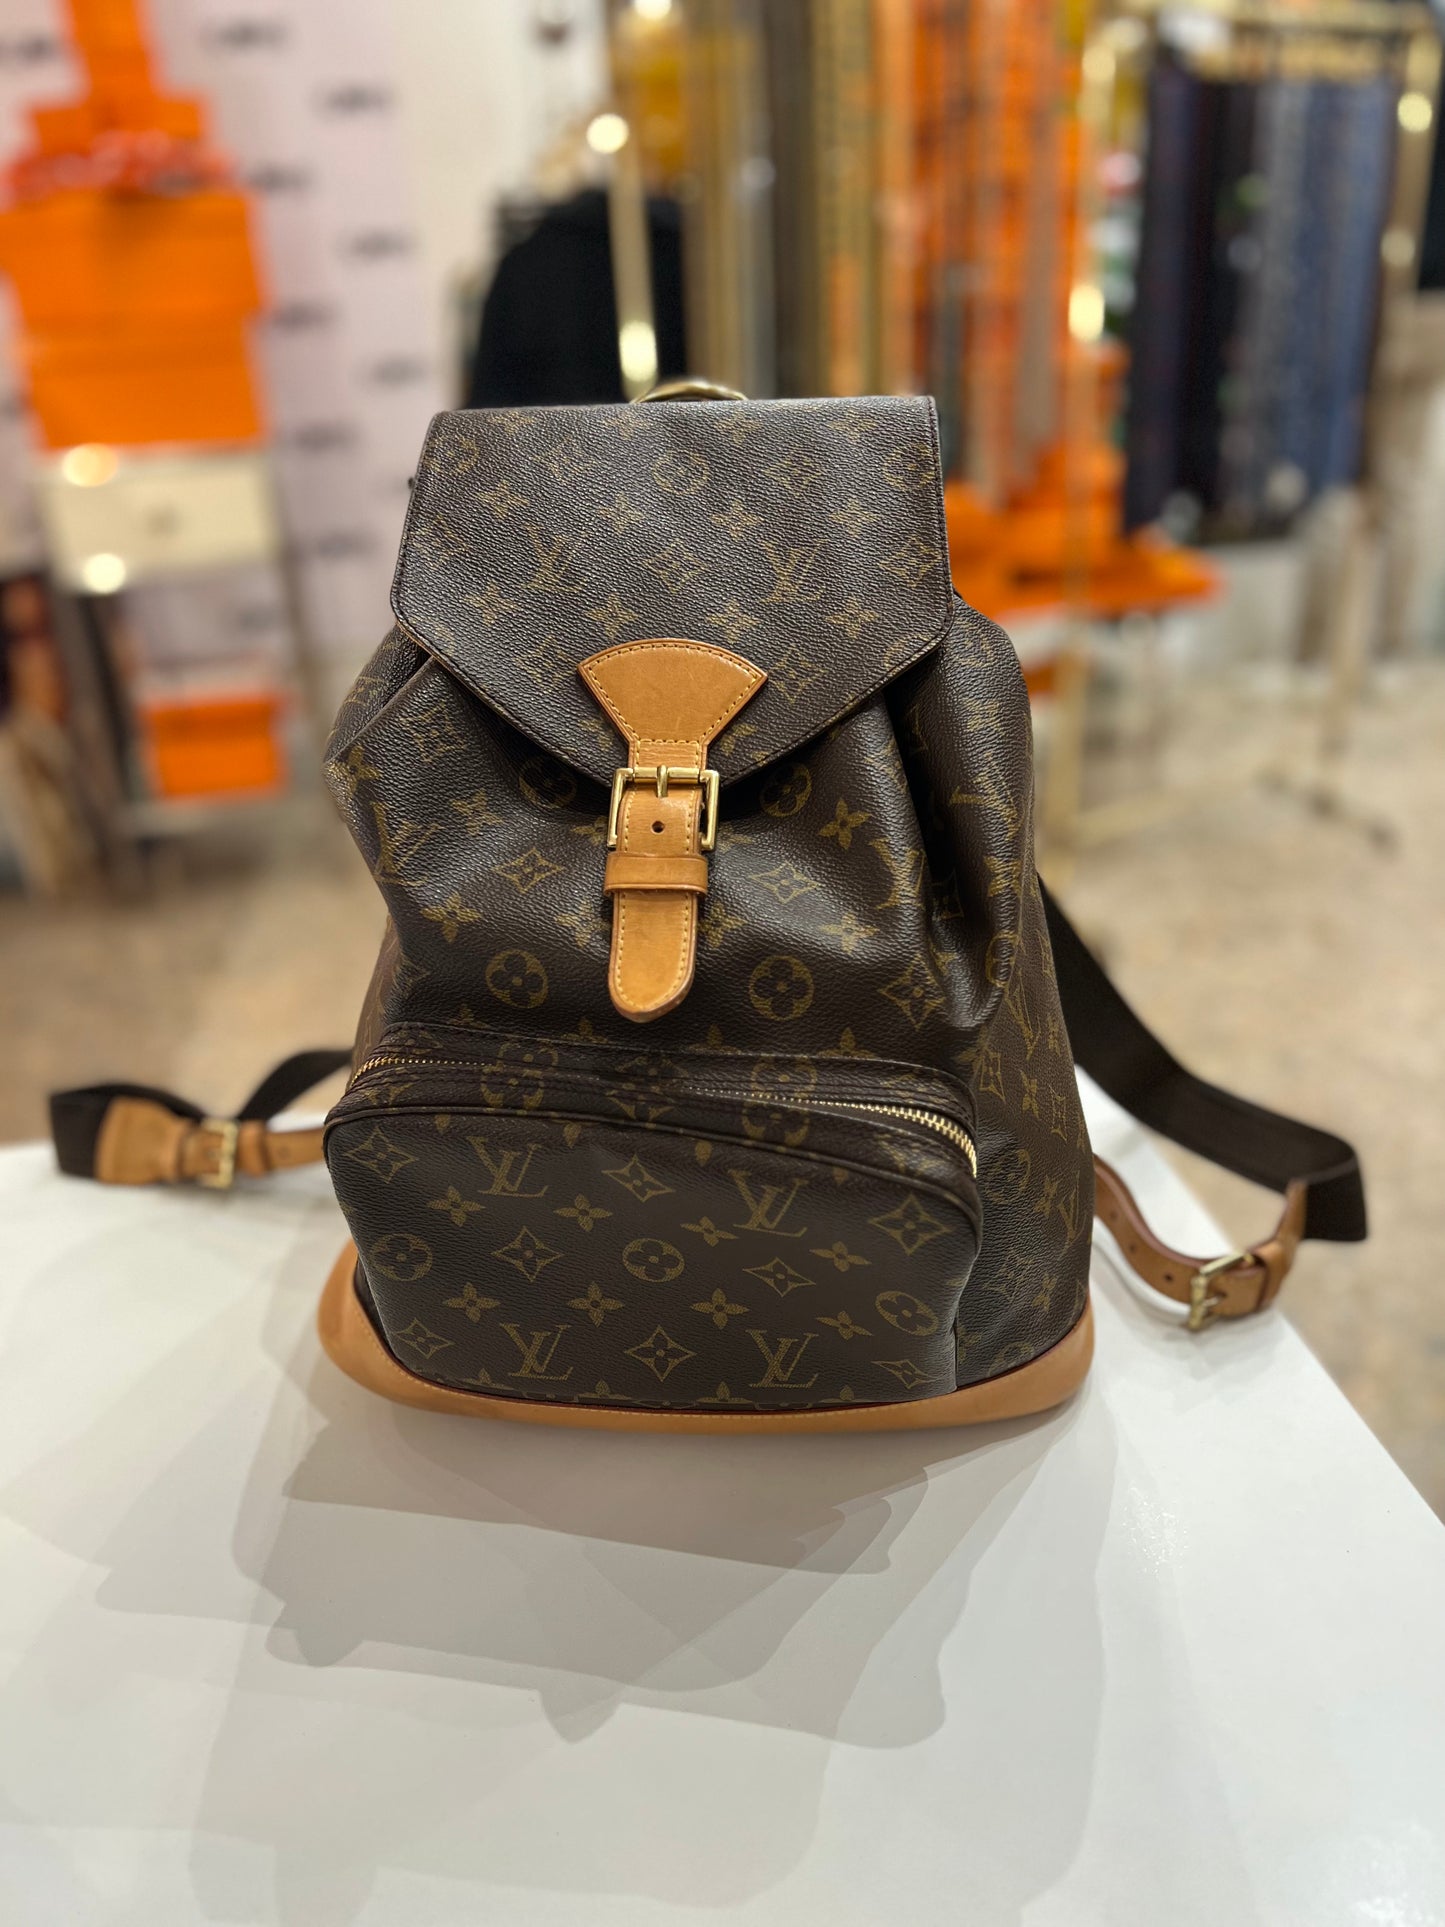 Louis Vuitton vintage backpack